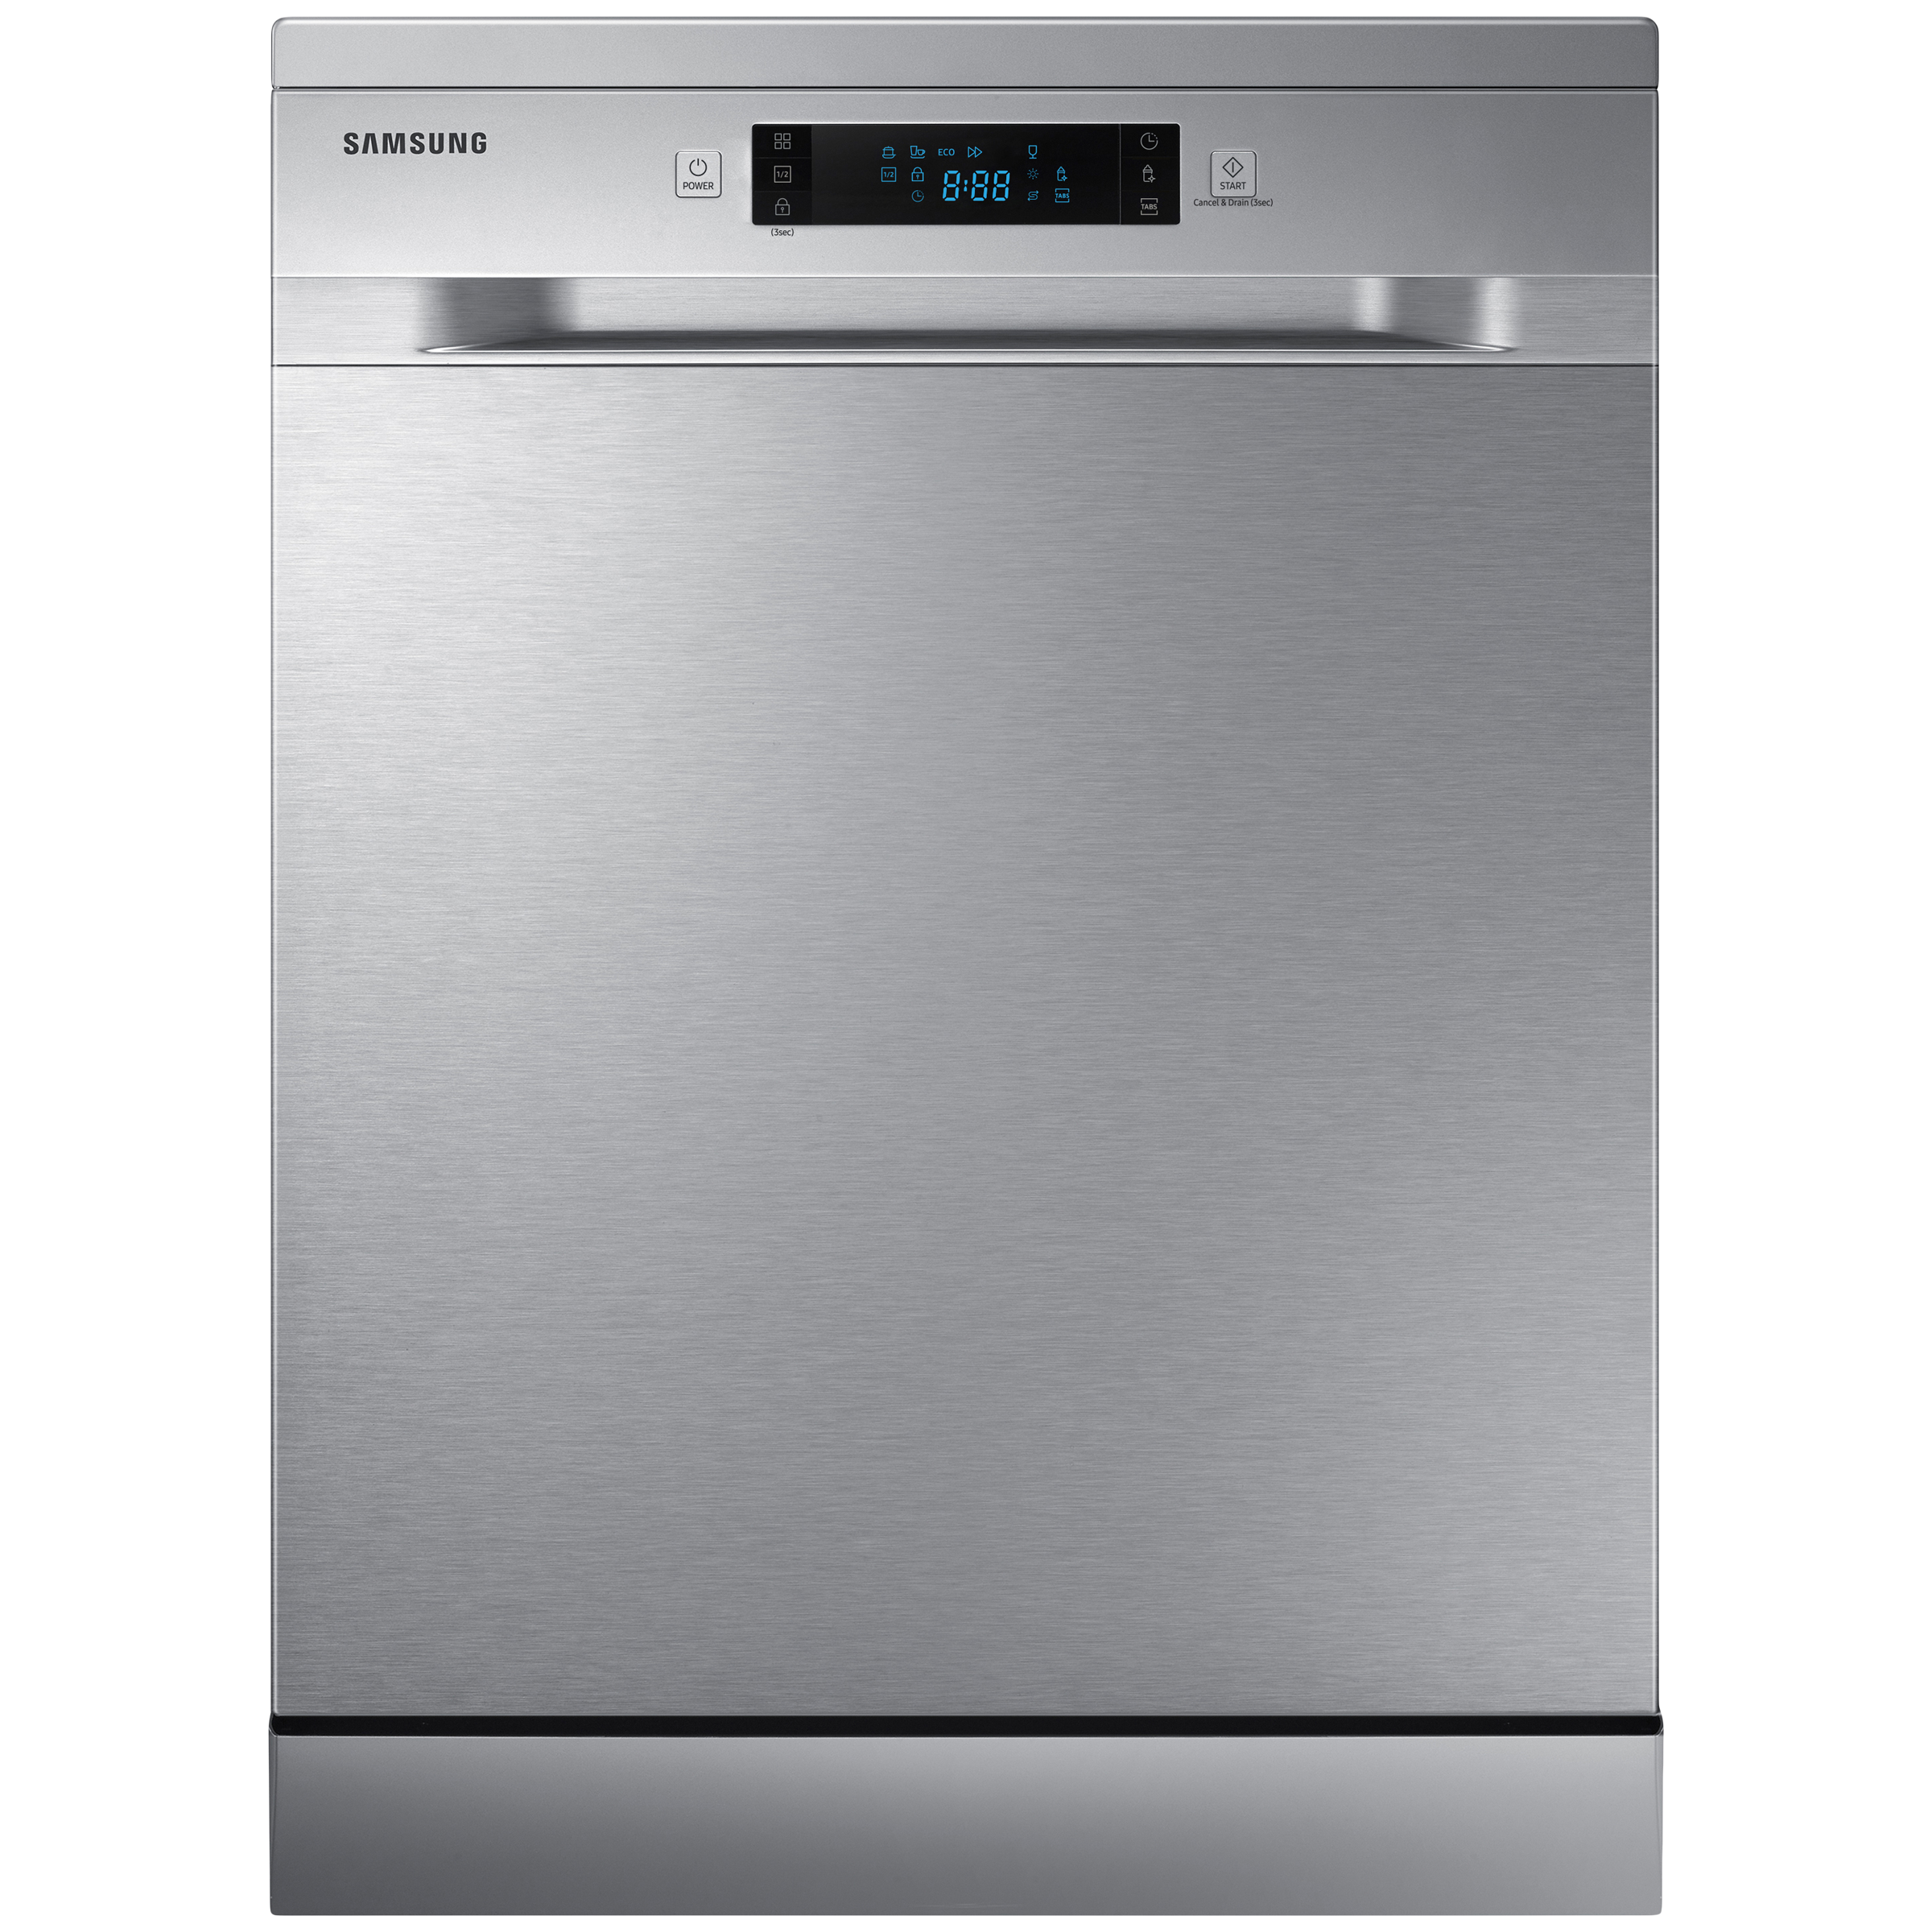 Samsung IntensiveWash 13 Place Setting Freestanding Dishwasher (4 Wash Programs, DW60M5042FS, Silver)_1